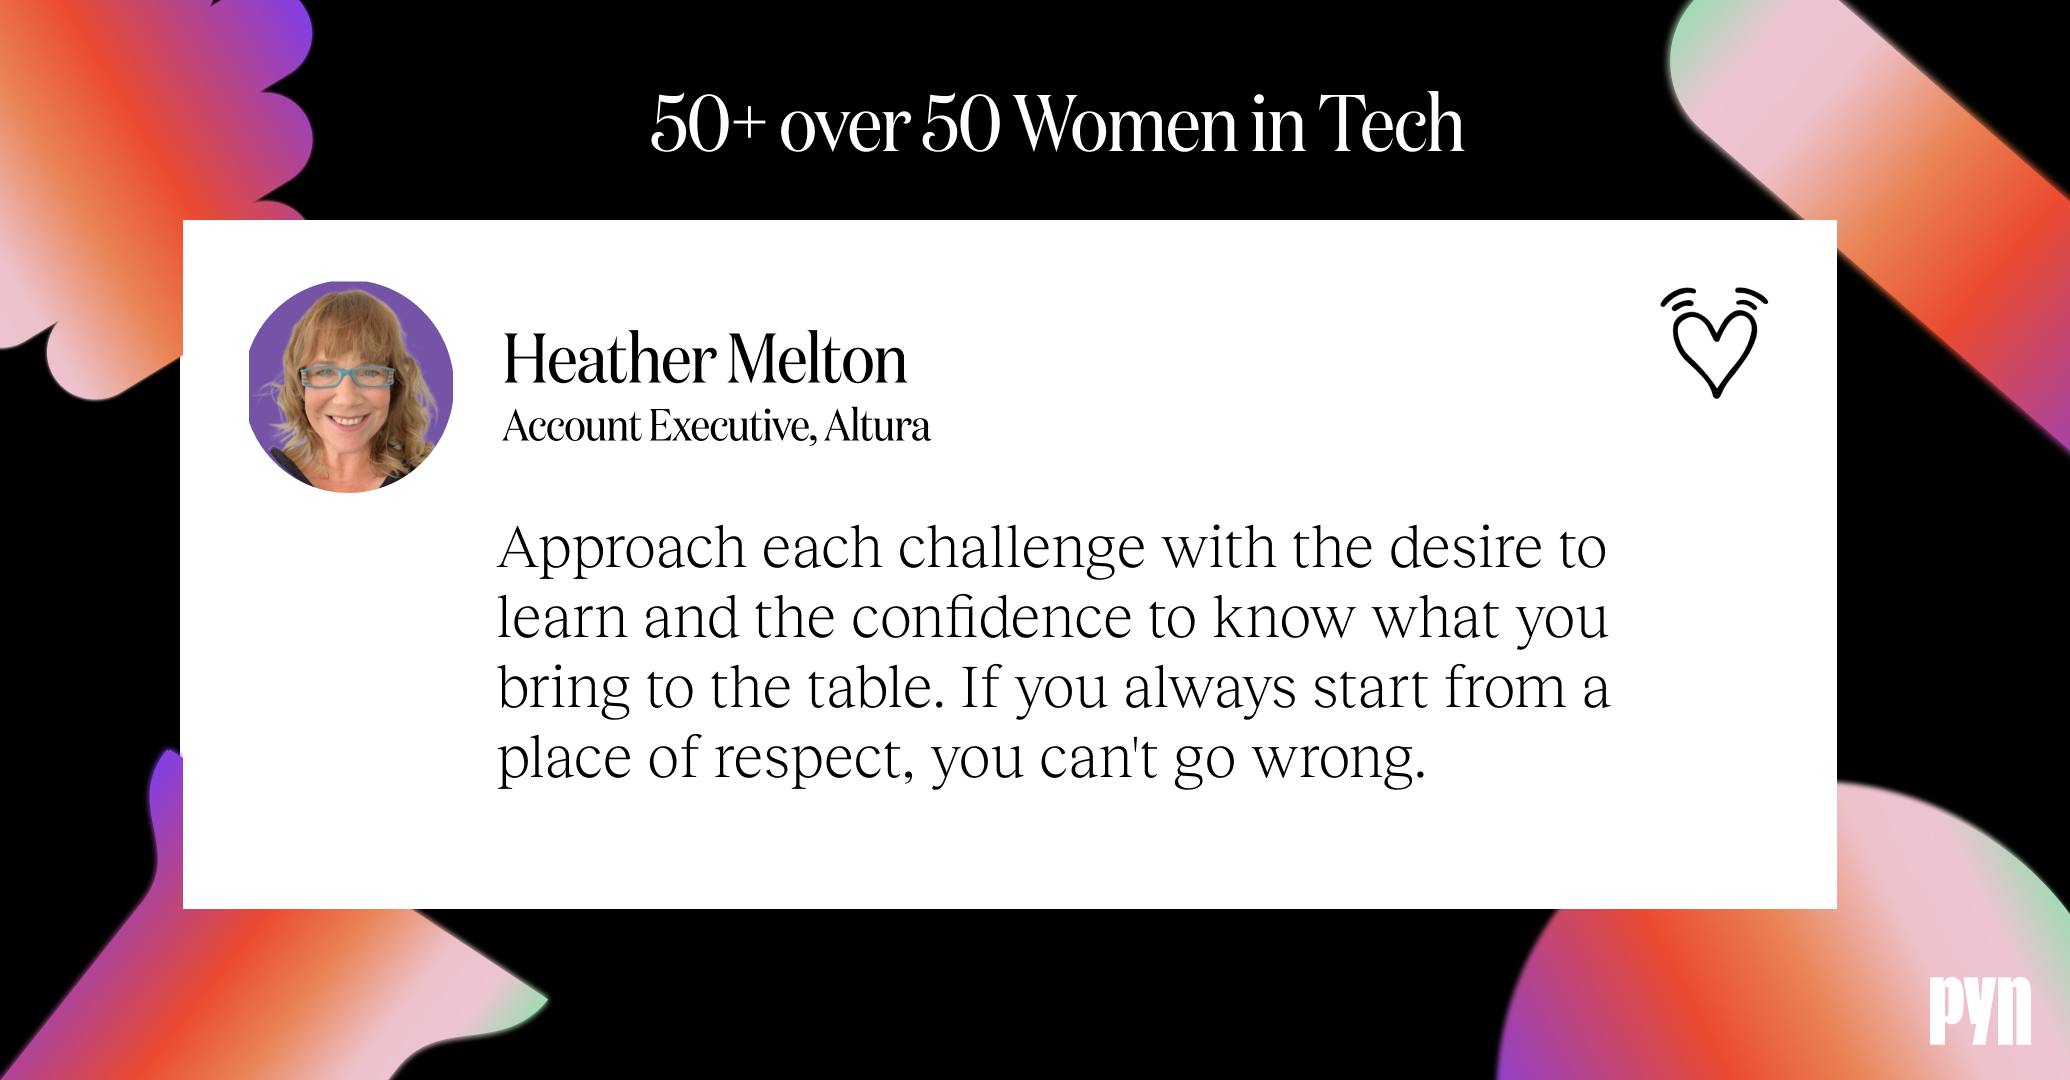 Heather Melton